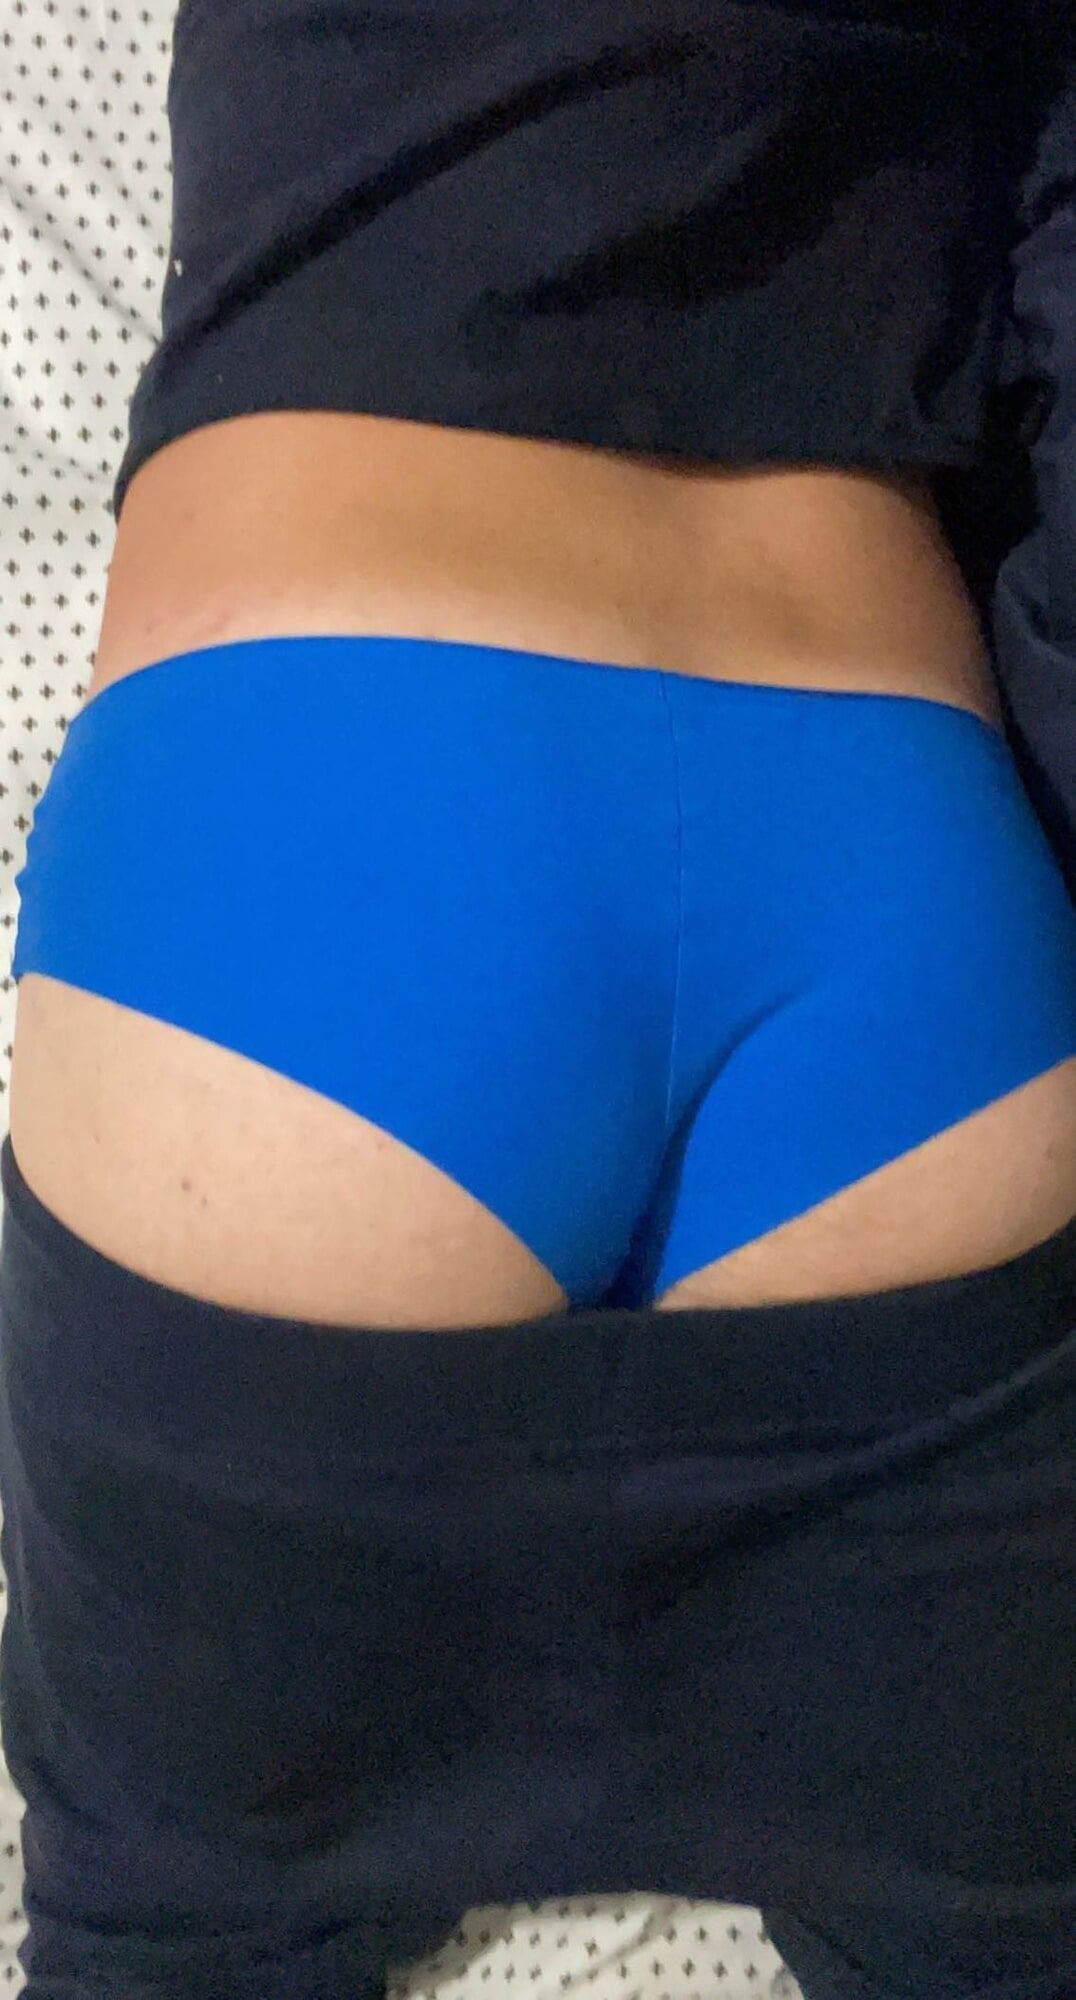 panties thong bubble butt gay undies #11